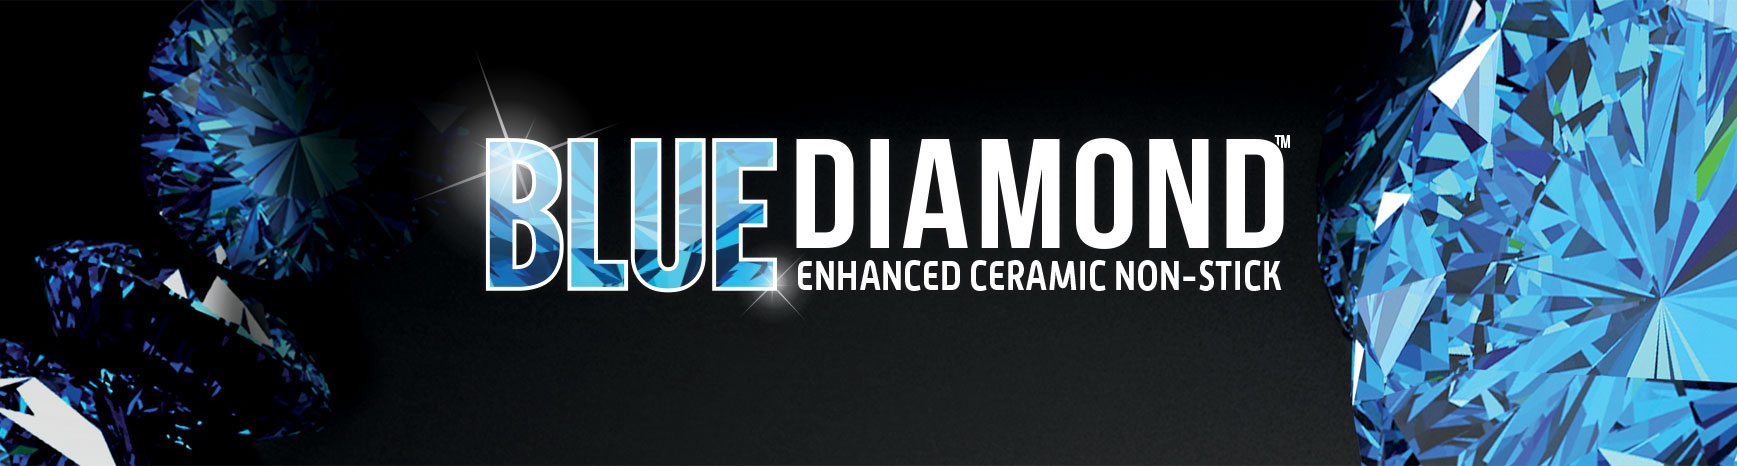 blue diamond, enhanced ceramic non-stick